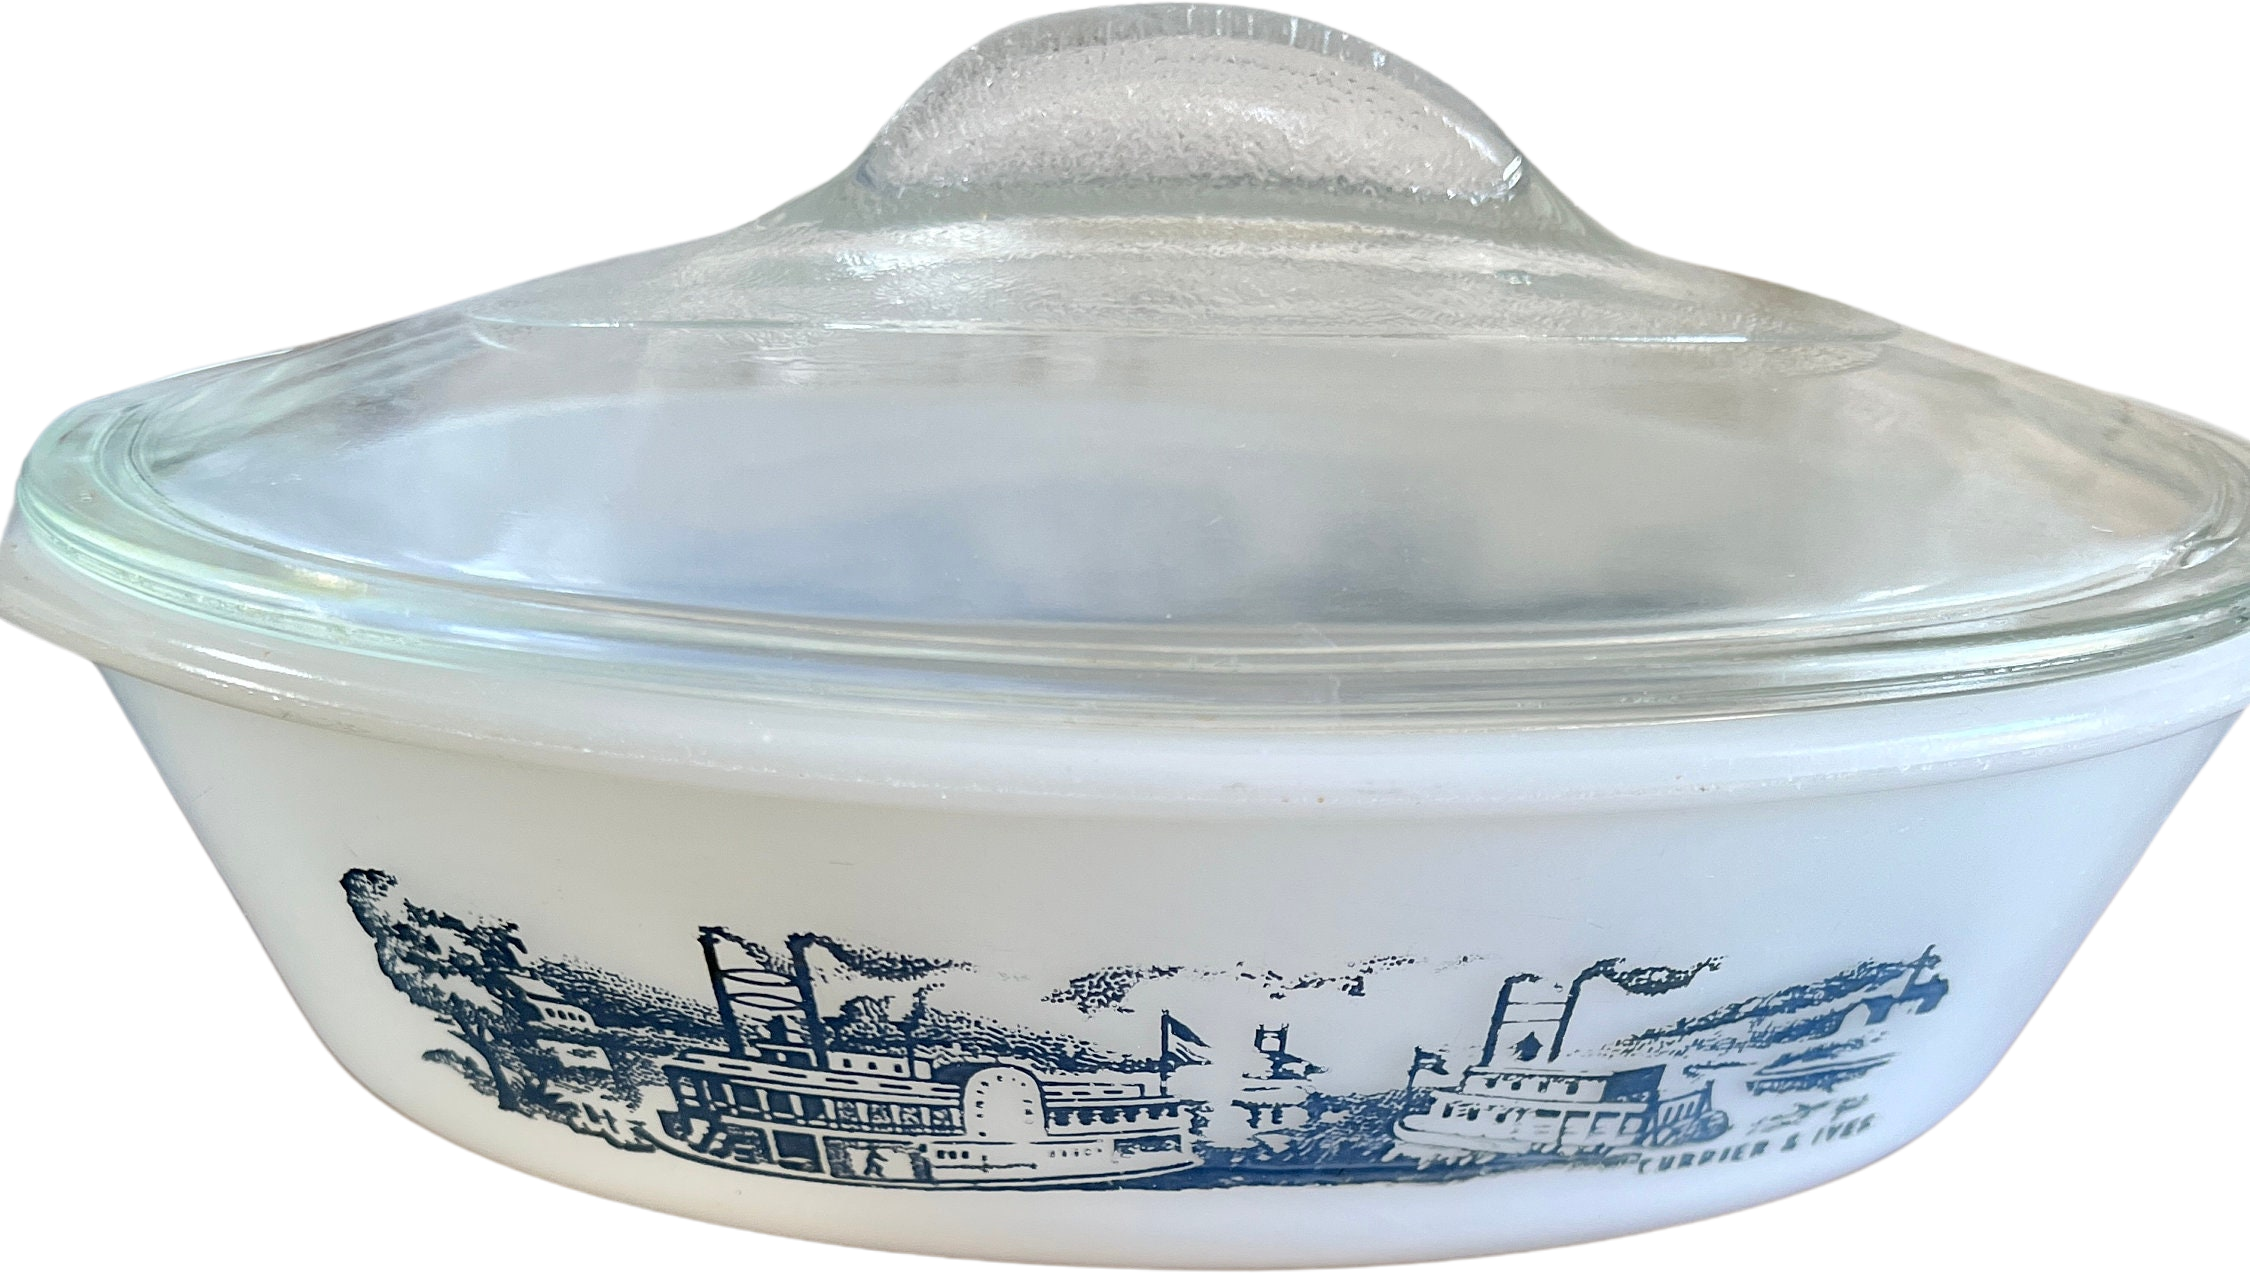 Vintage Glasbake 1 Qt. Milk Glass Casserole Dish with Glass Clear Lid